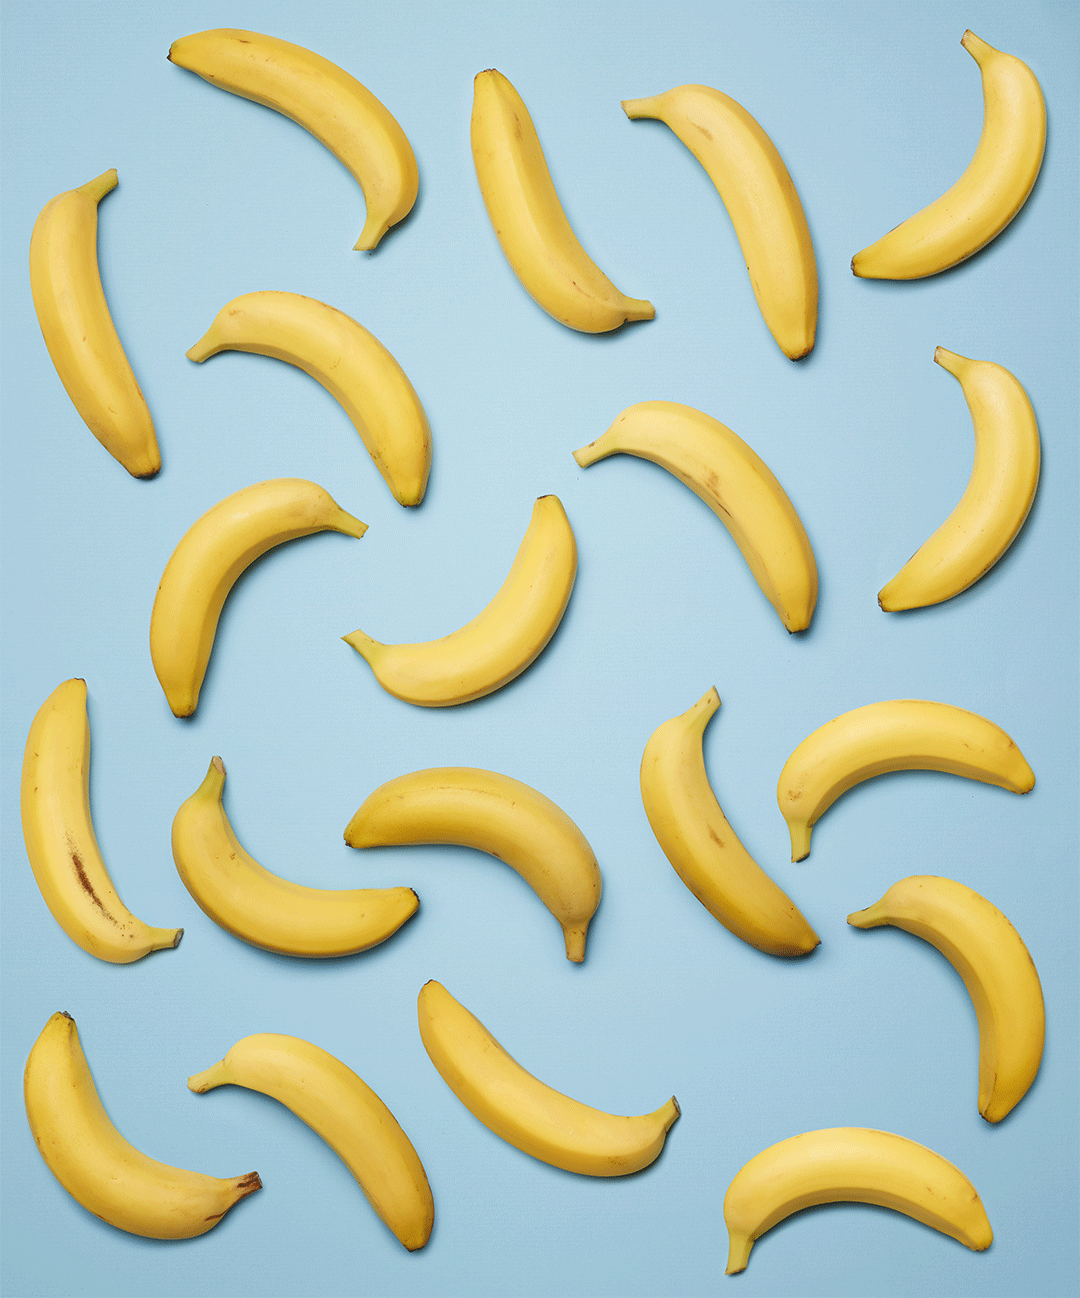 Chelsea Bloxsome | Food Photographer London banana 2